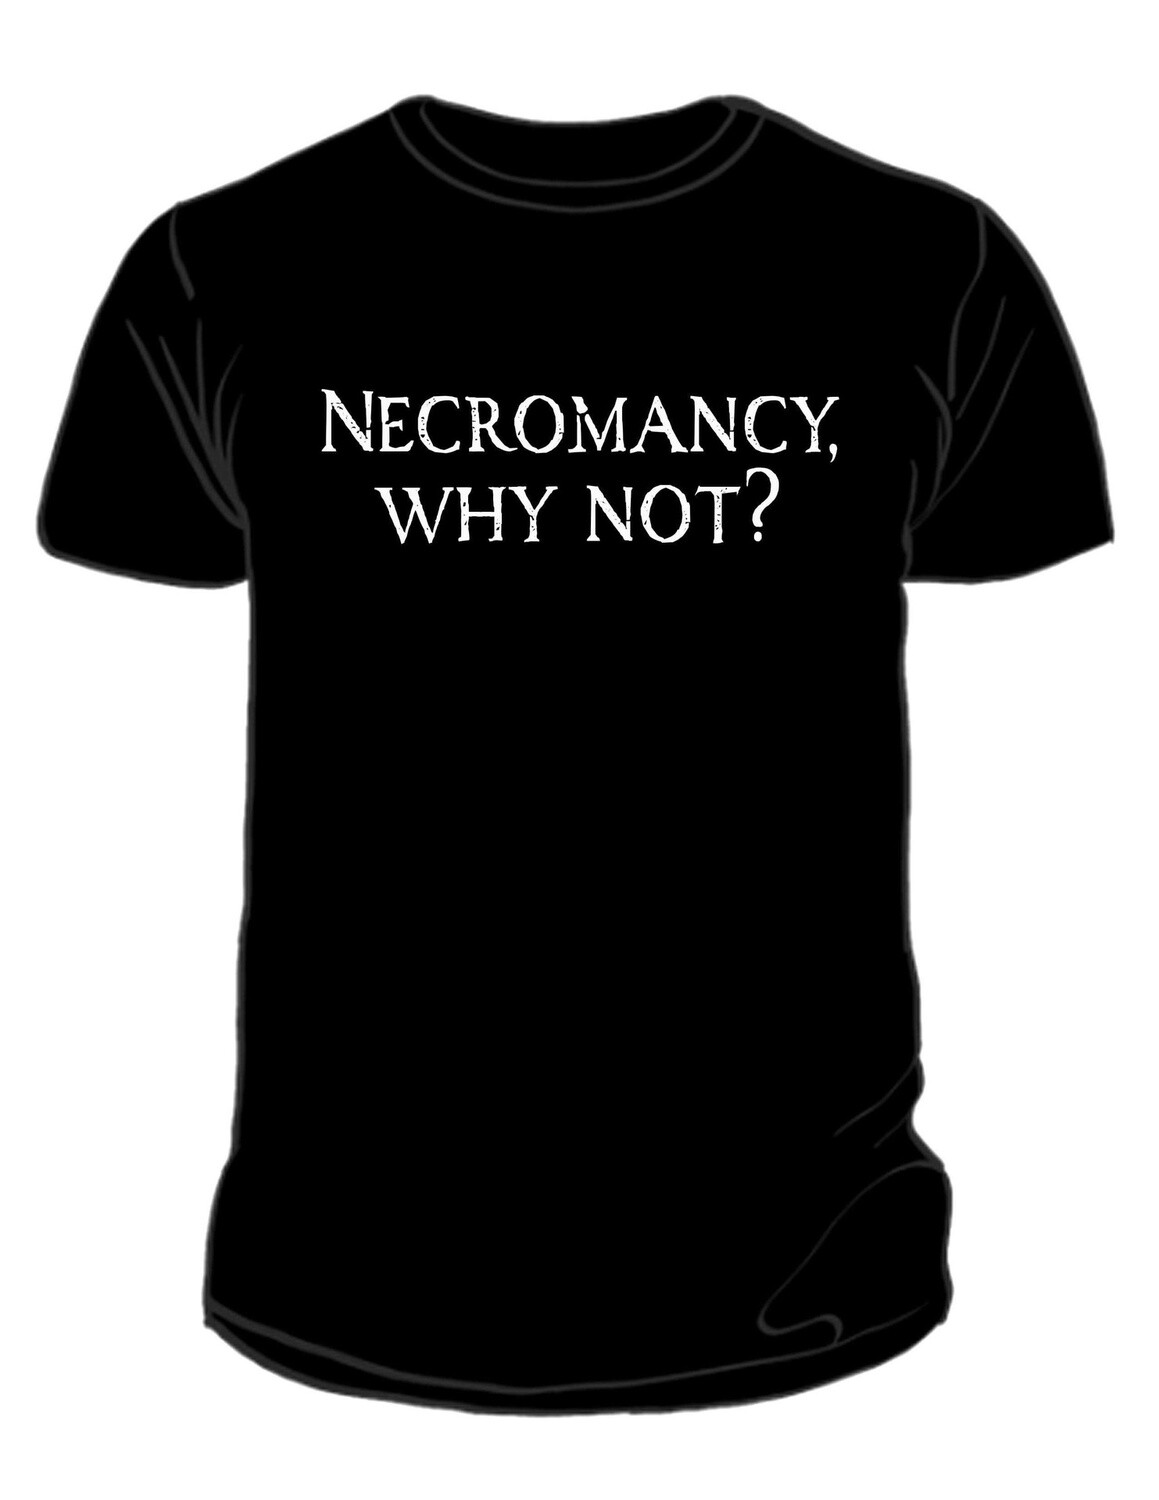 NECROMANCY WHY NOT t shirt